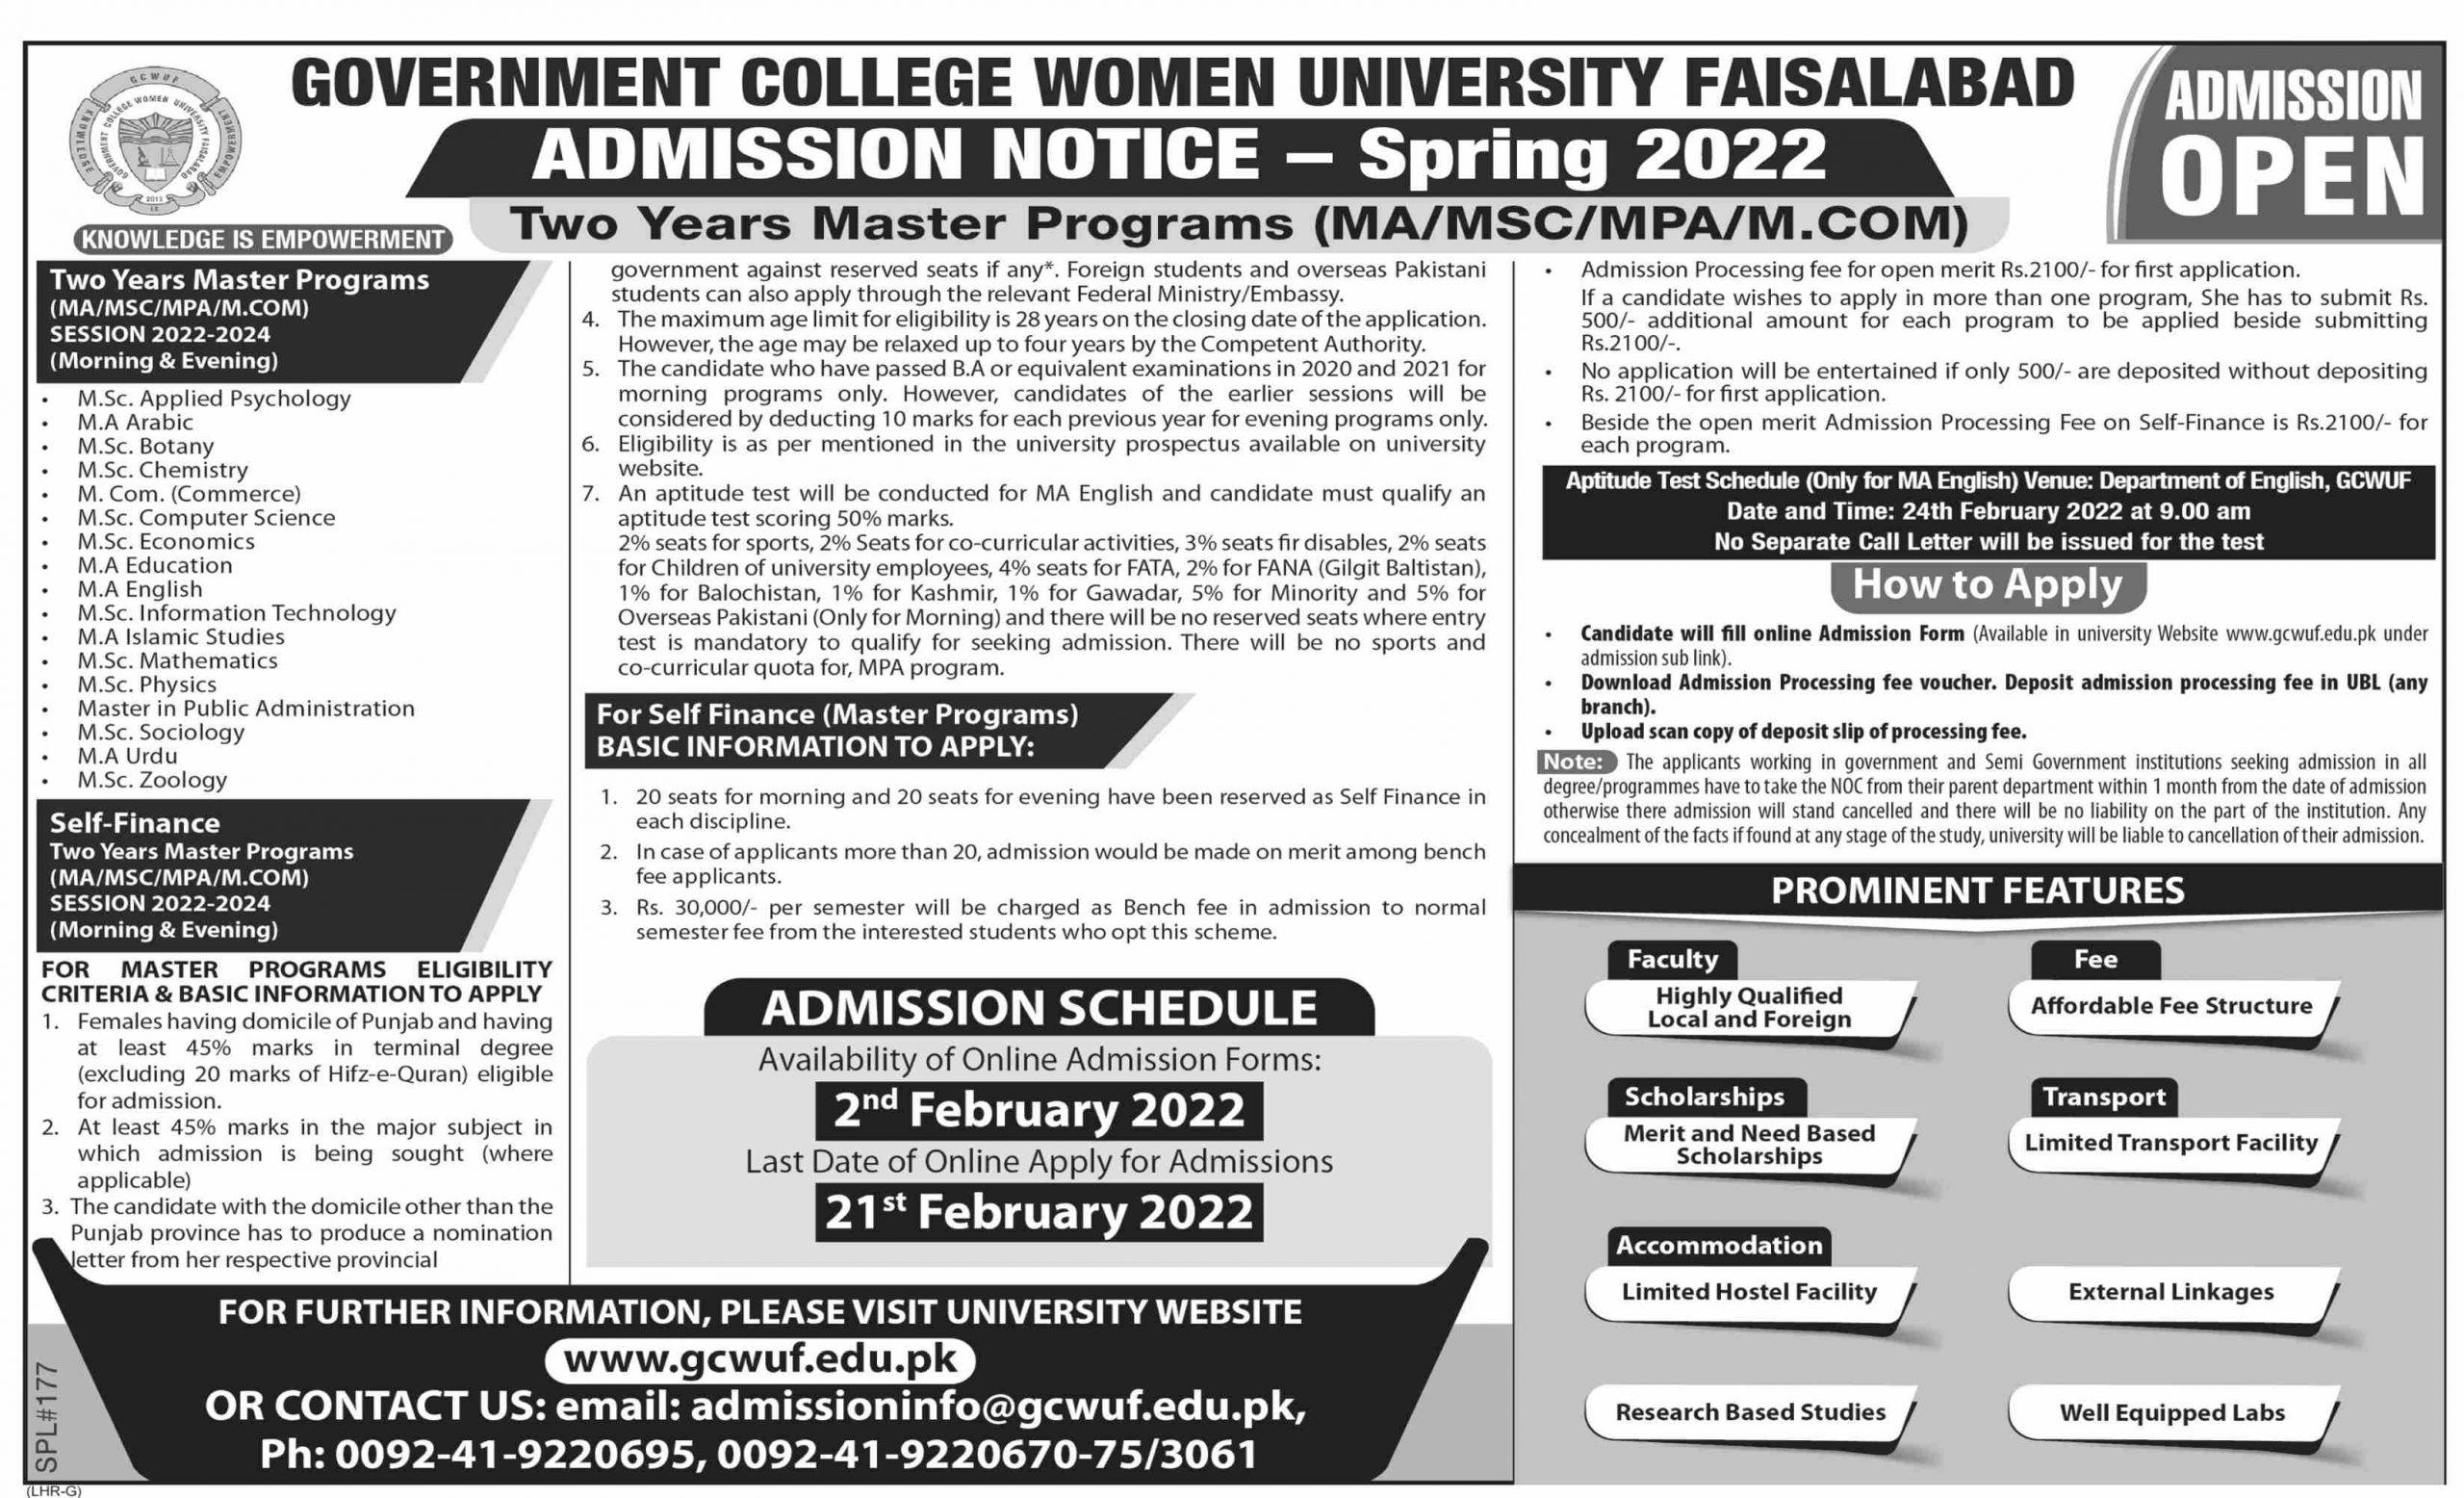 Government College Women University Faisalabad Admission 2022